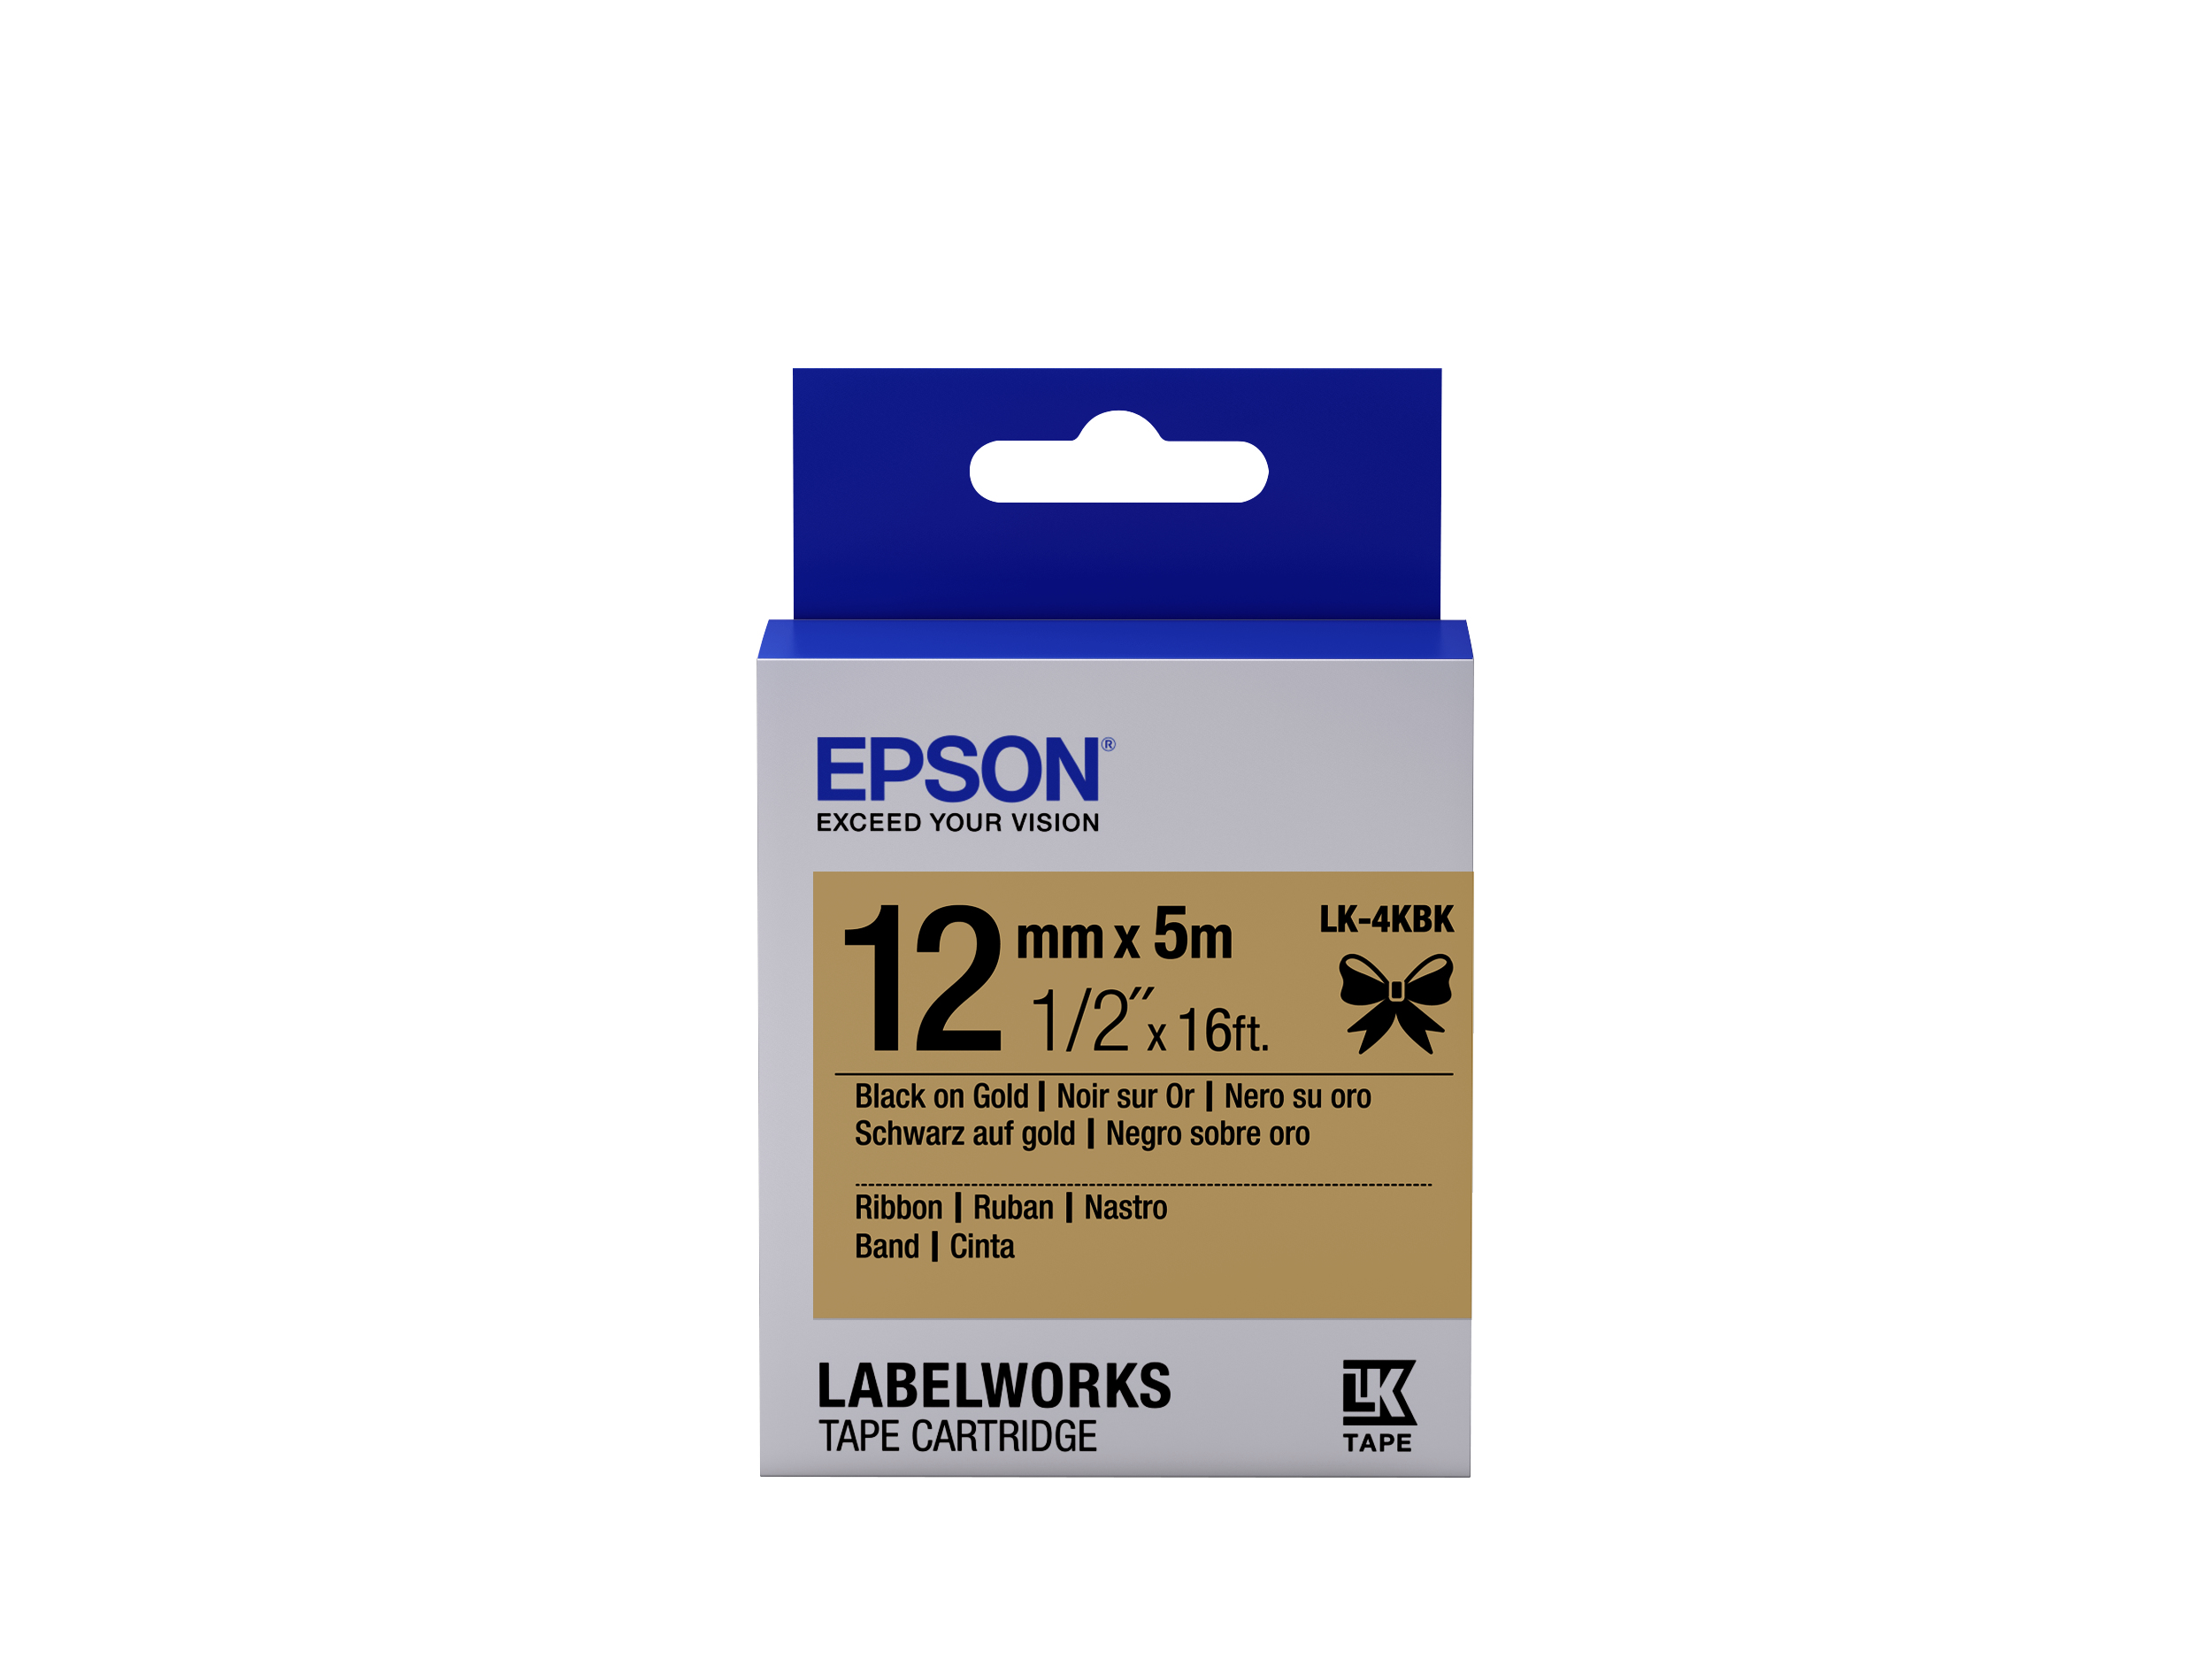 Epson etikettkassett Satinband LK-4KBK svart/guld 12 mm (5 m)